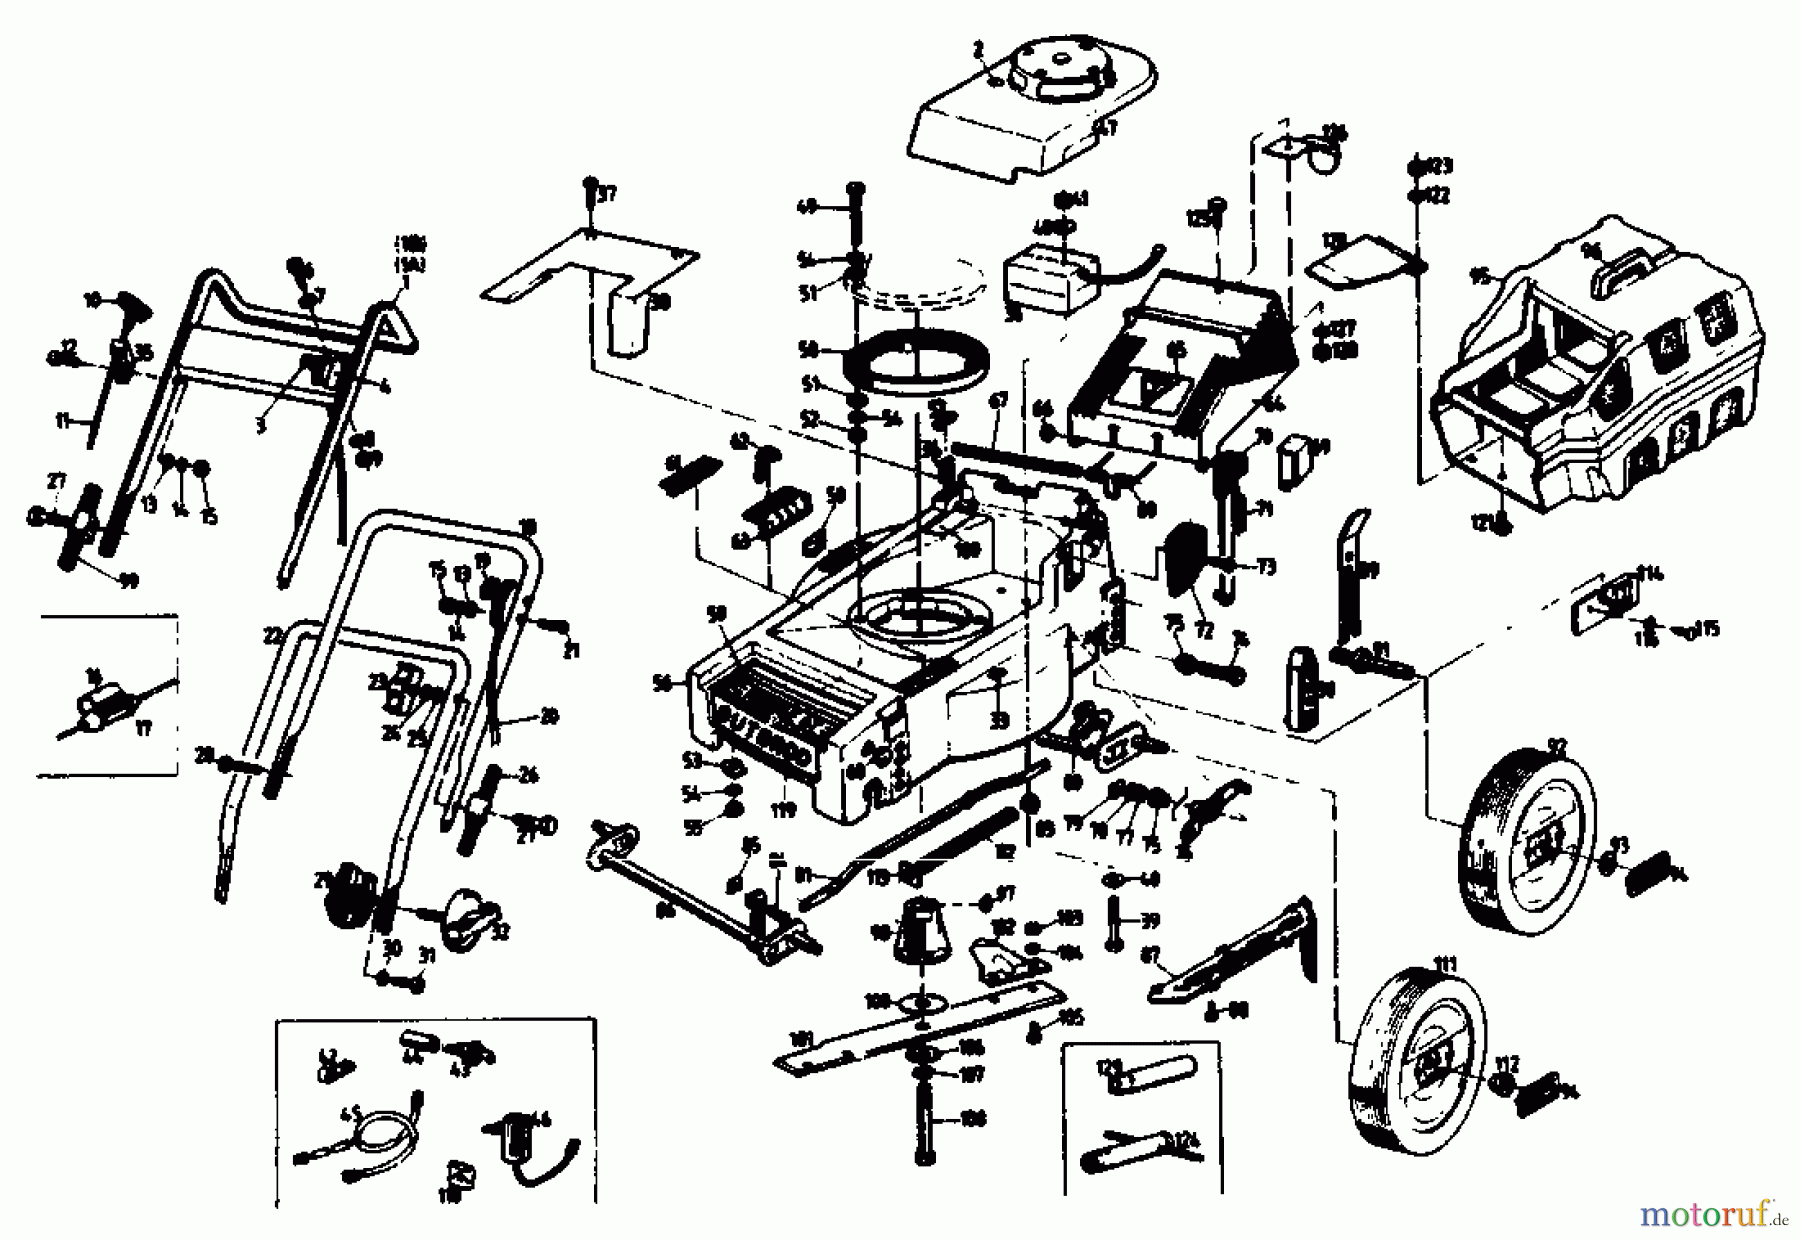  Gutbrod Petrol mower HB 40 02896.01  (1989) Basic machine